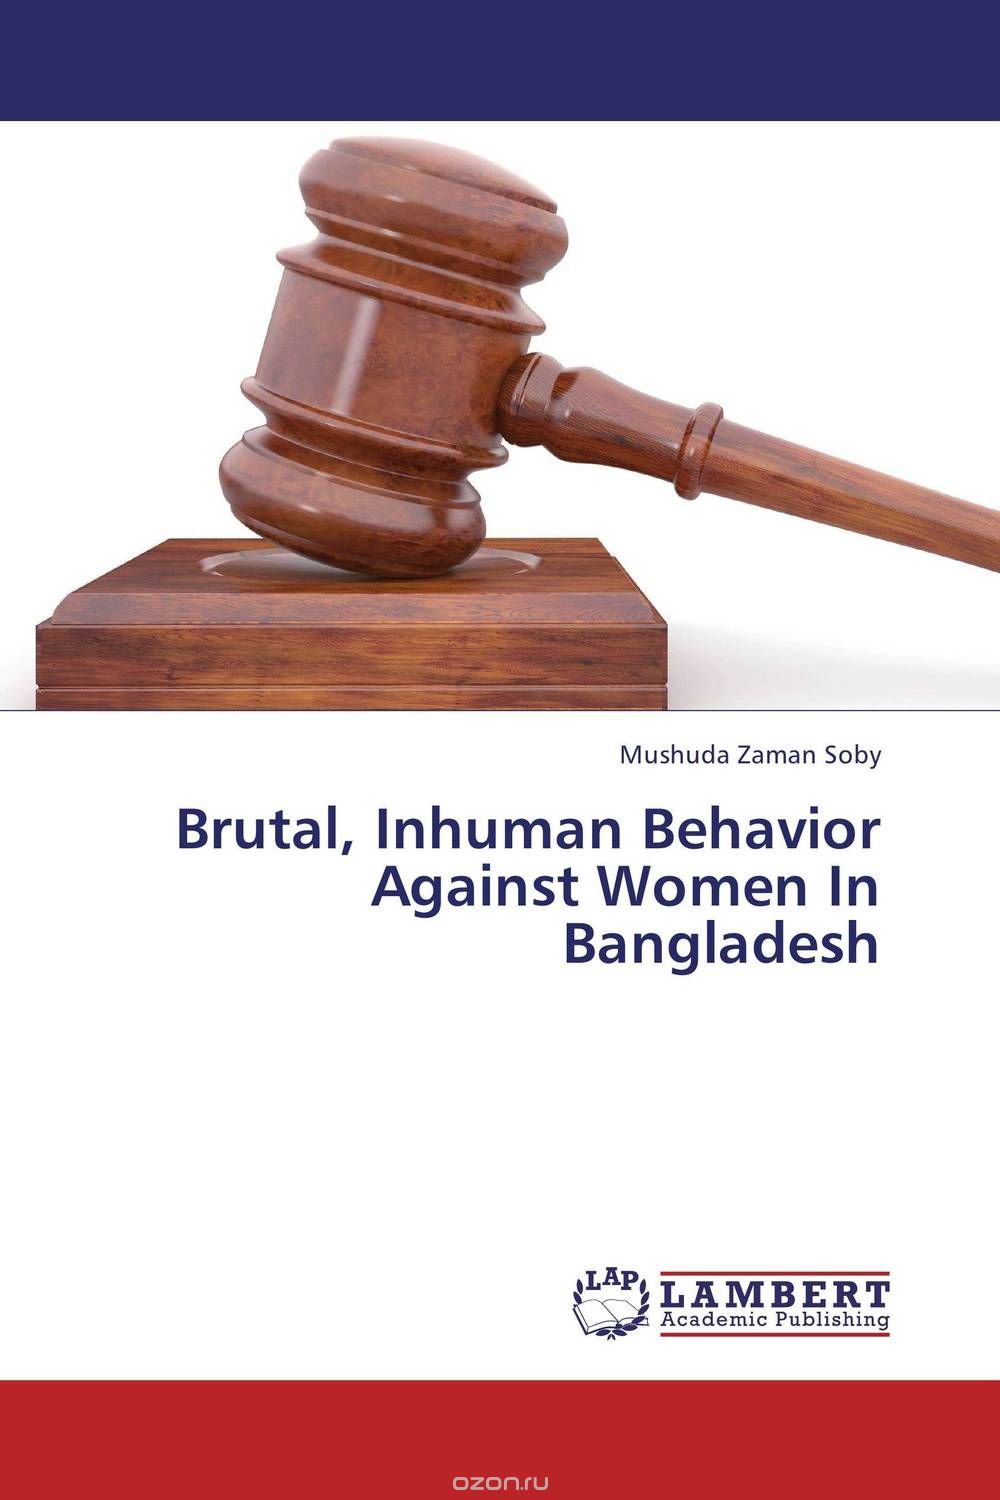 Скачать книгу "Brutal, Inhuman Behavior Against Women In Bangladesh"